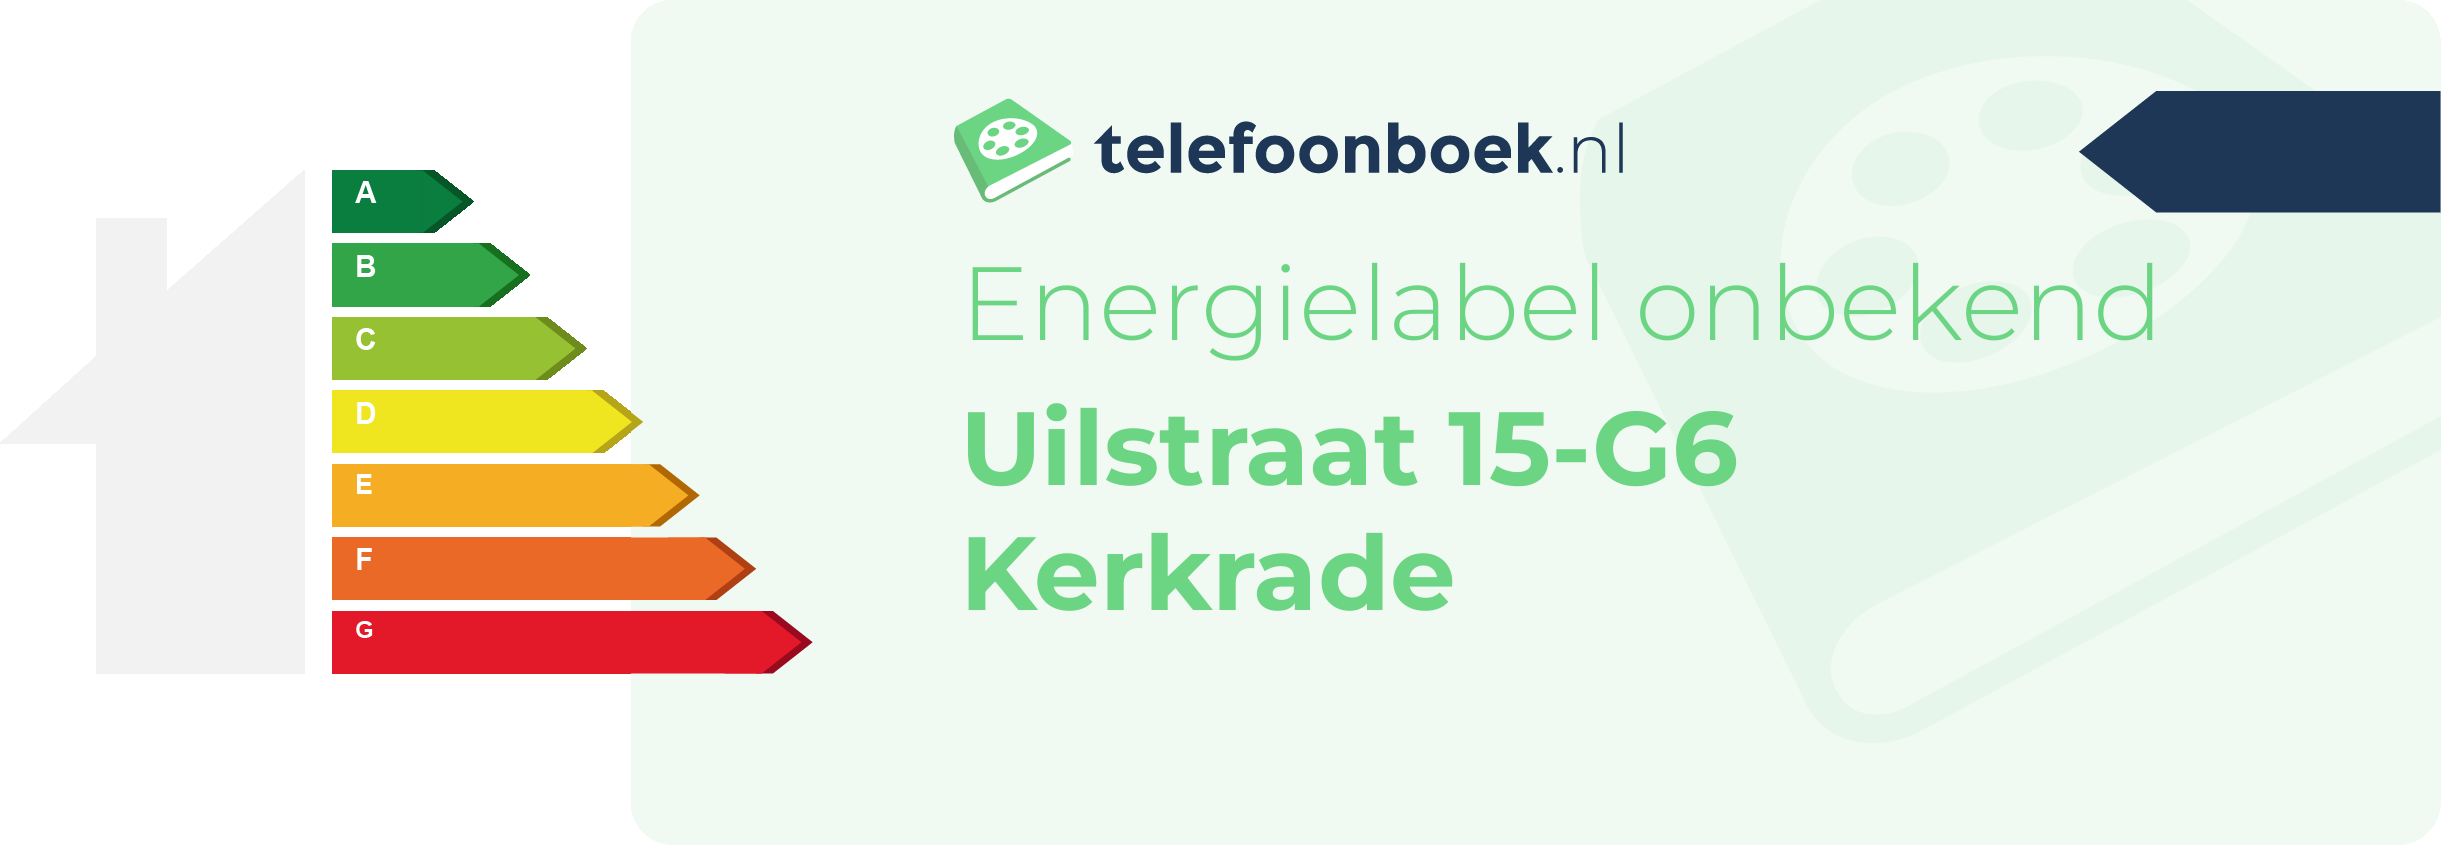 Energielabel Uilstraat 15-G6 Kerkrade